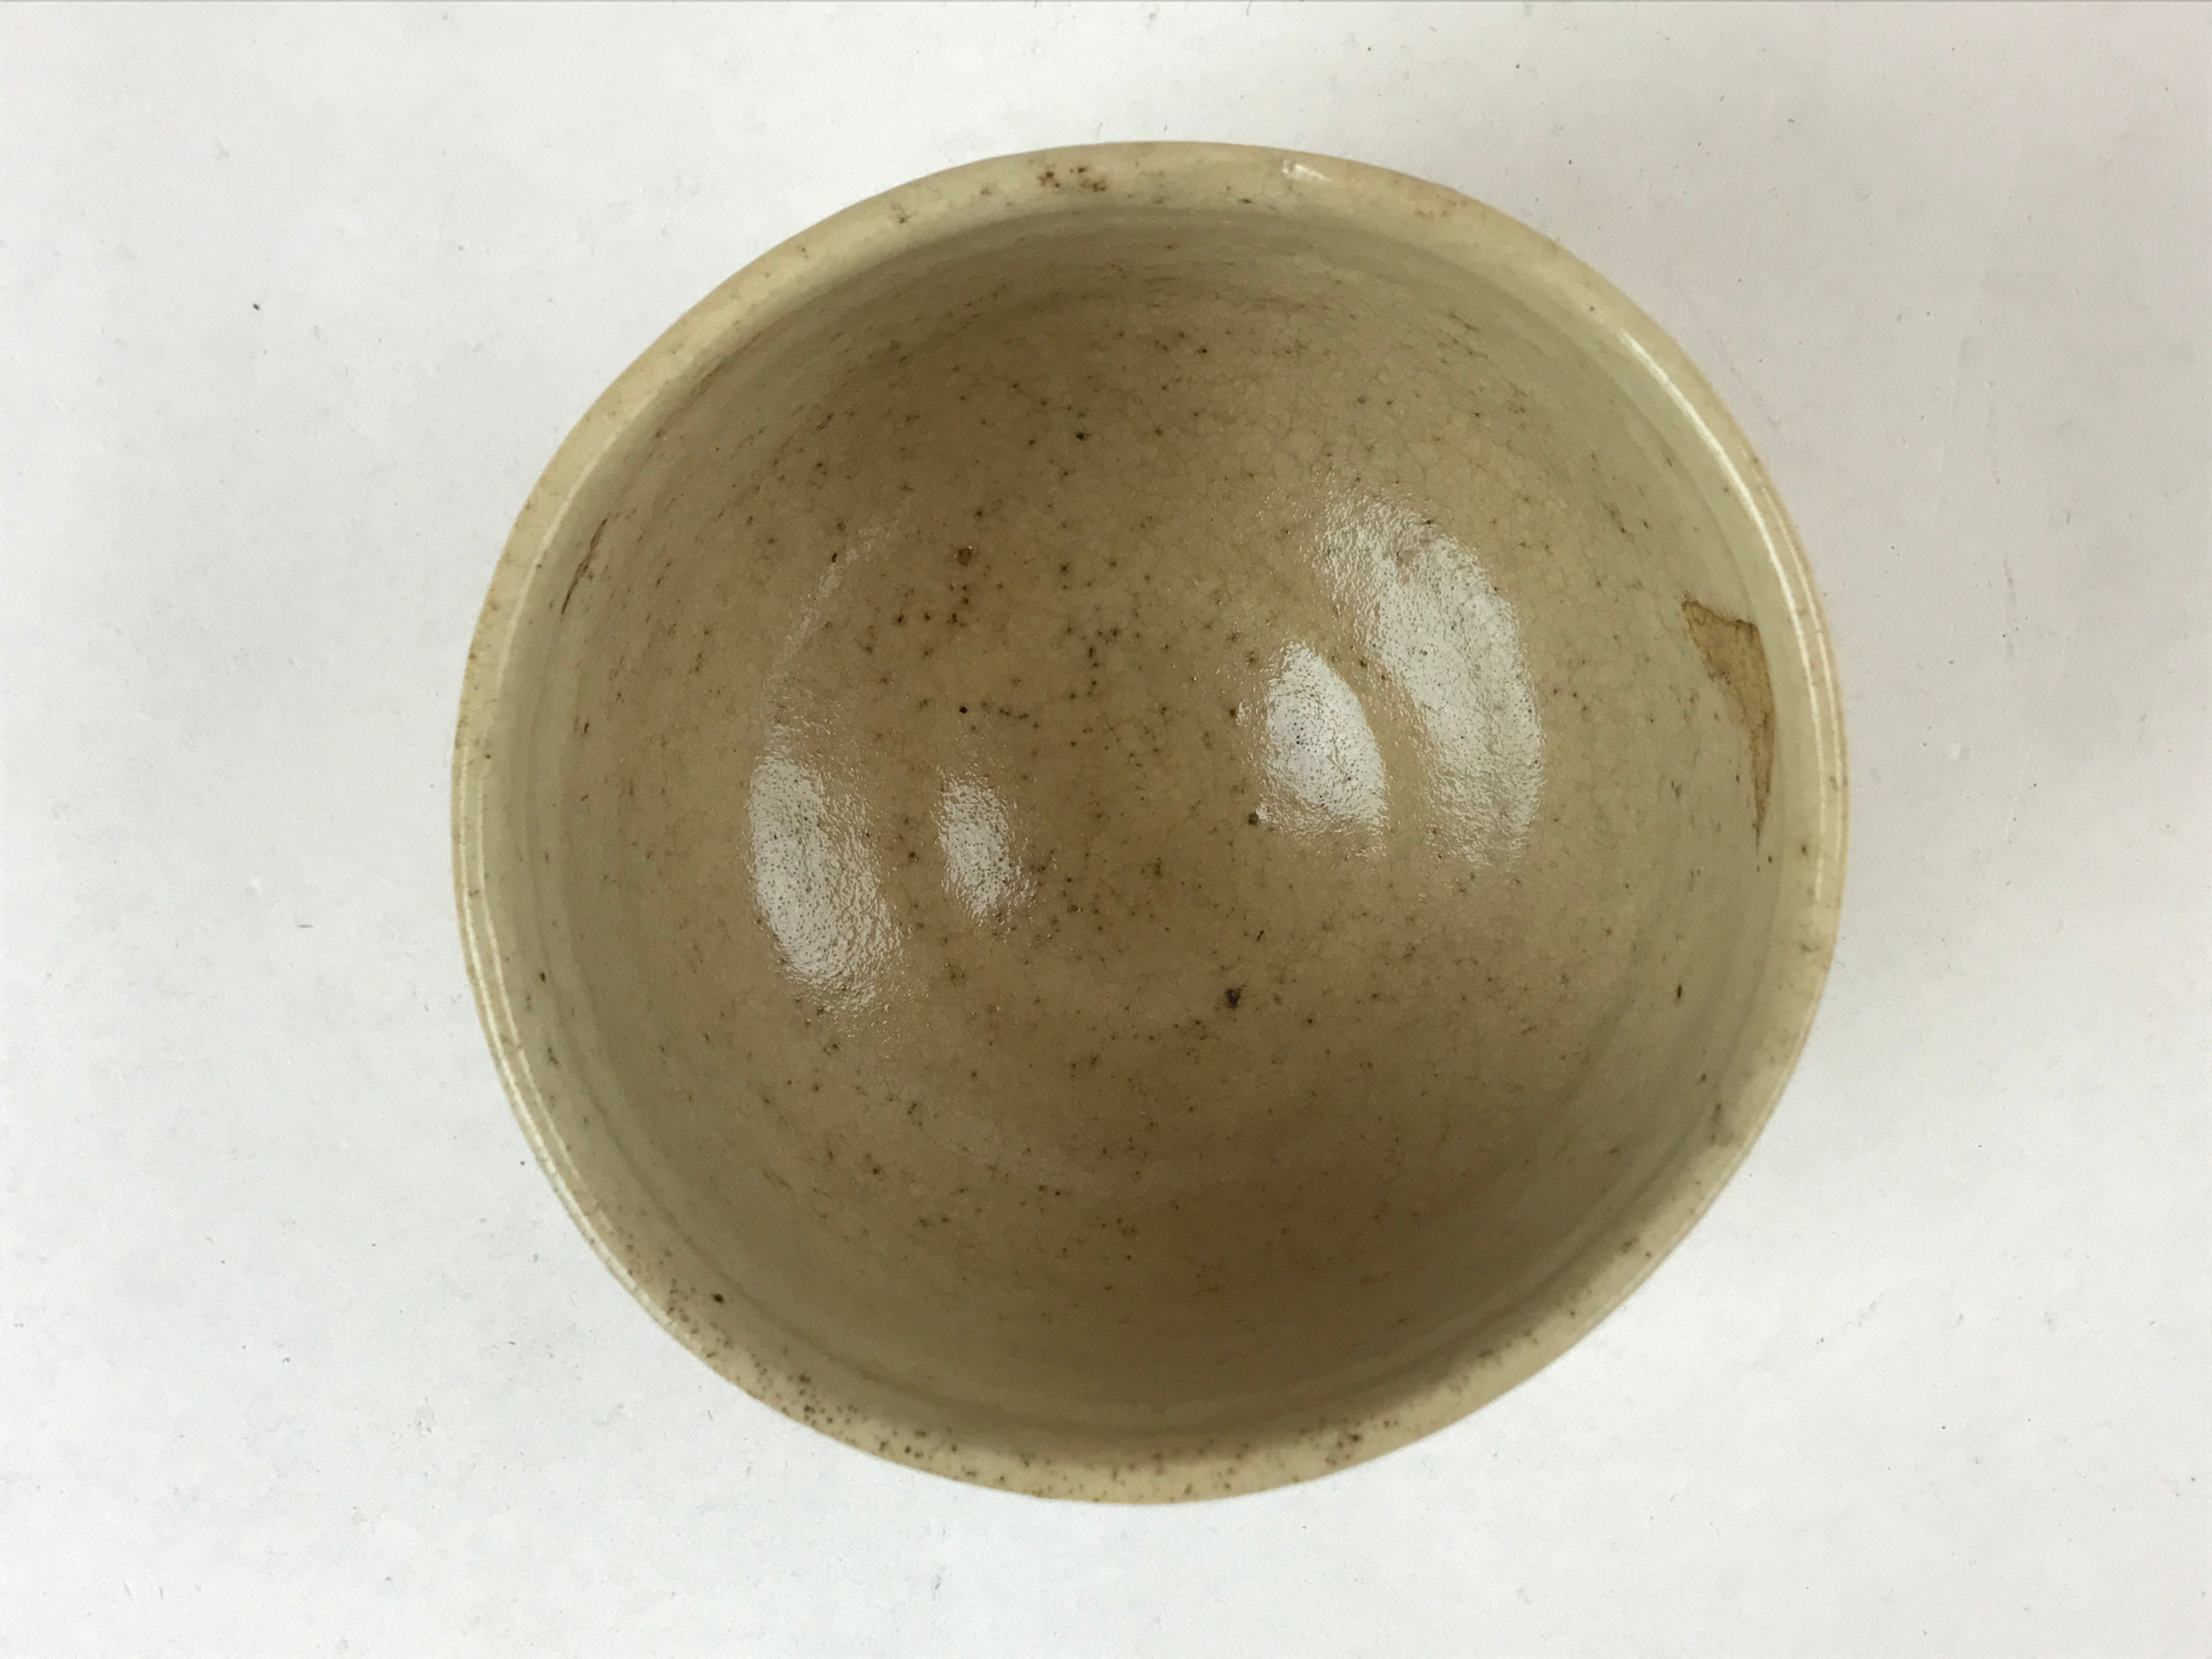 Japanese Ceramic Green Tea Bowl Vtg Beige Blue Characters Matcha Chawan CHB27